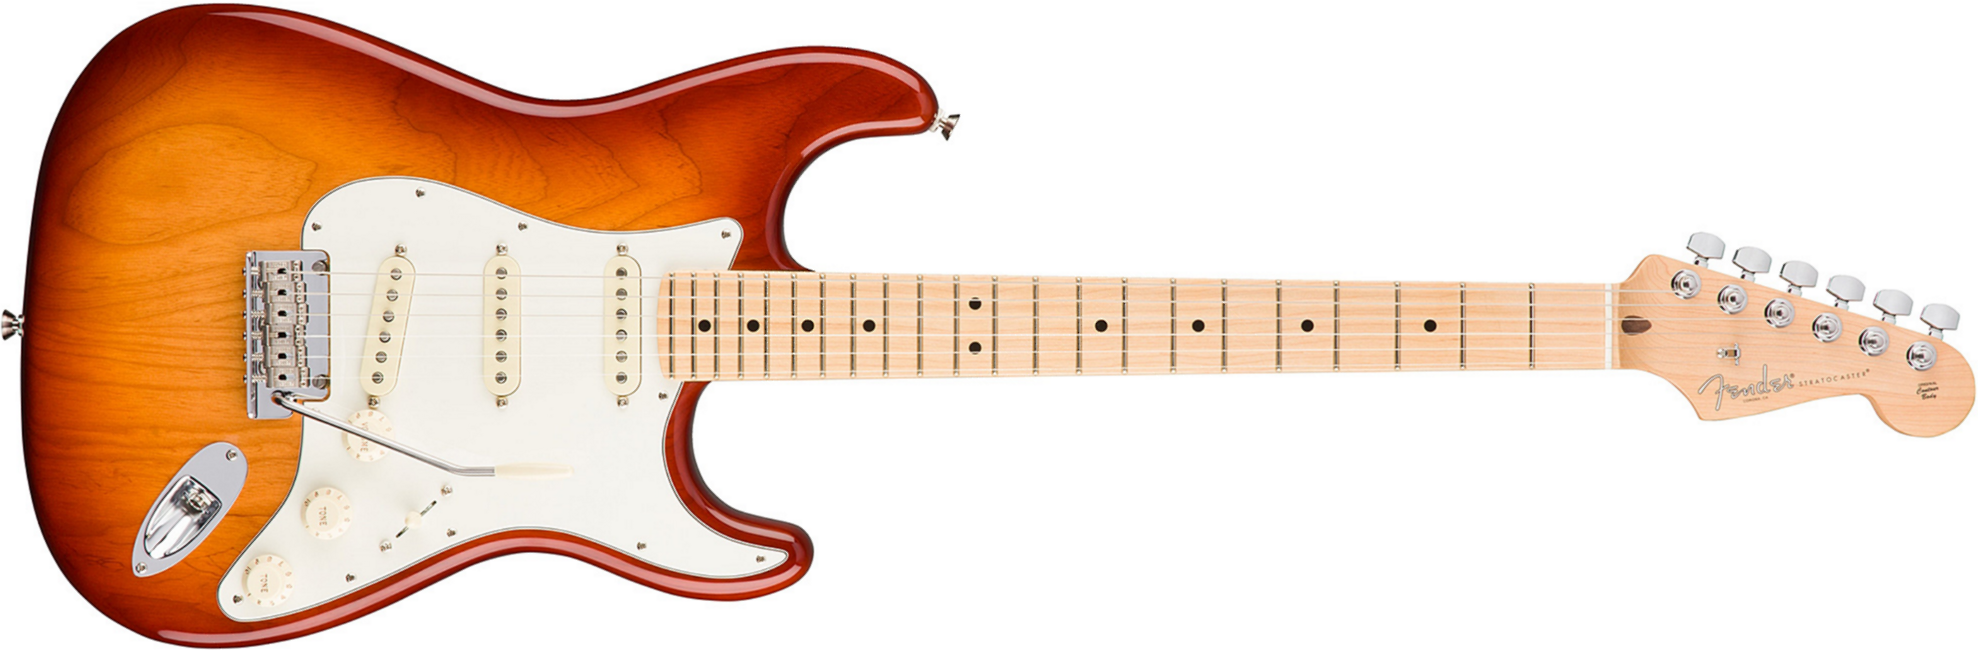 Fender Strat American Professional 2017 3s Usa Mn - Sienna Sunburst - Guitare Électrique Forme Str - Main picture